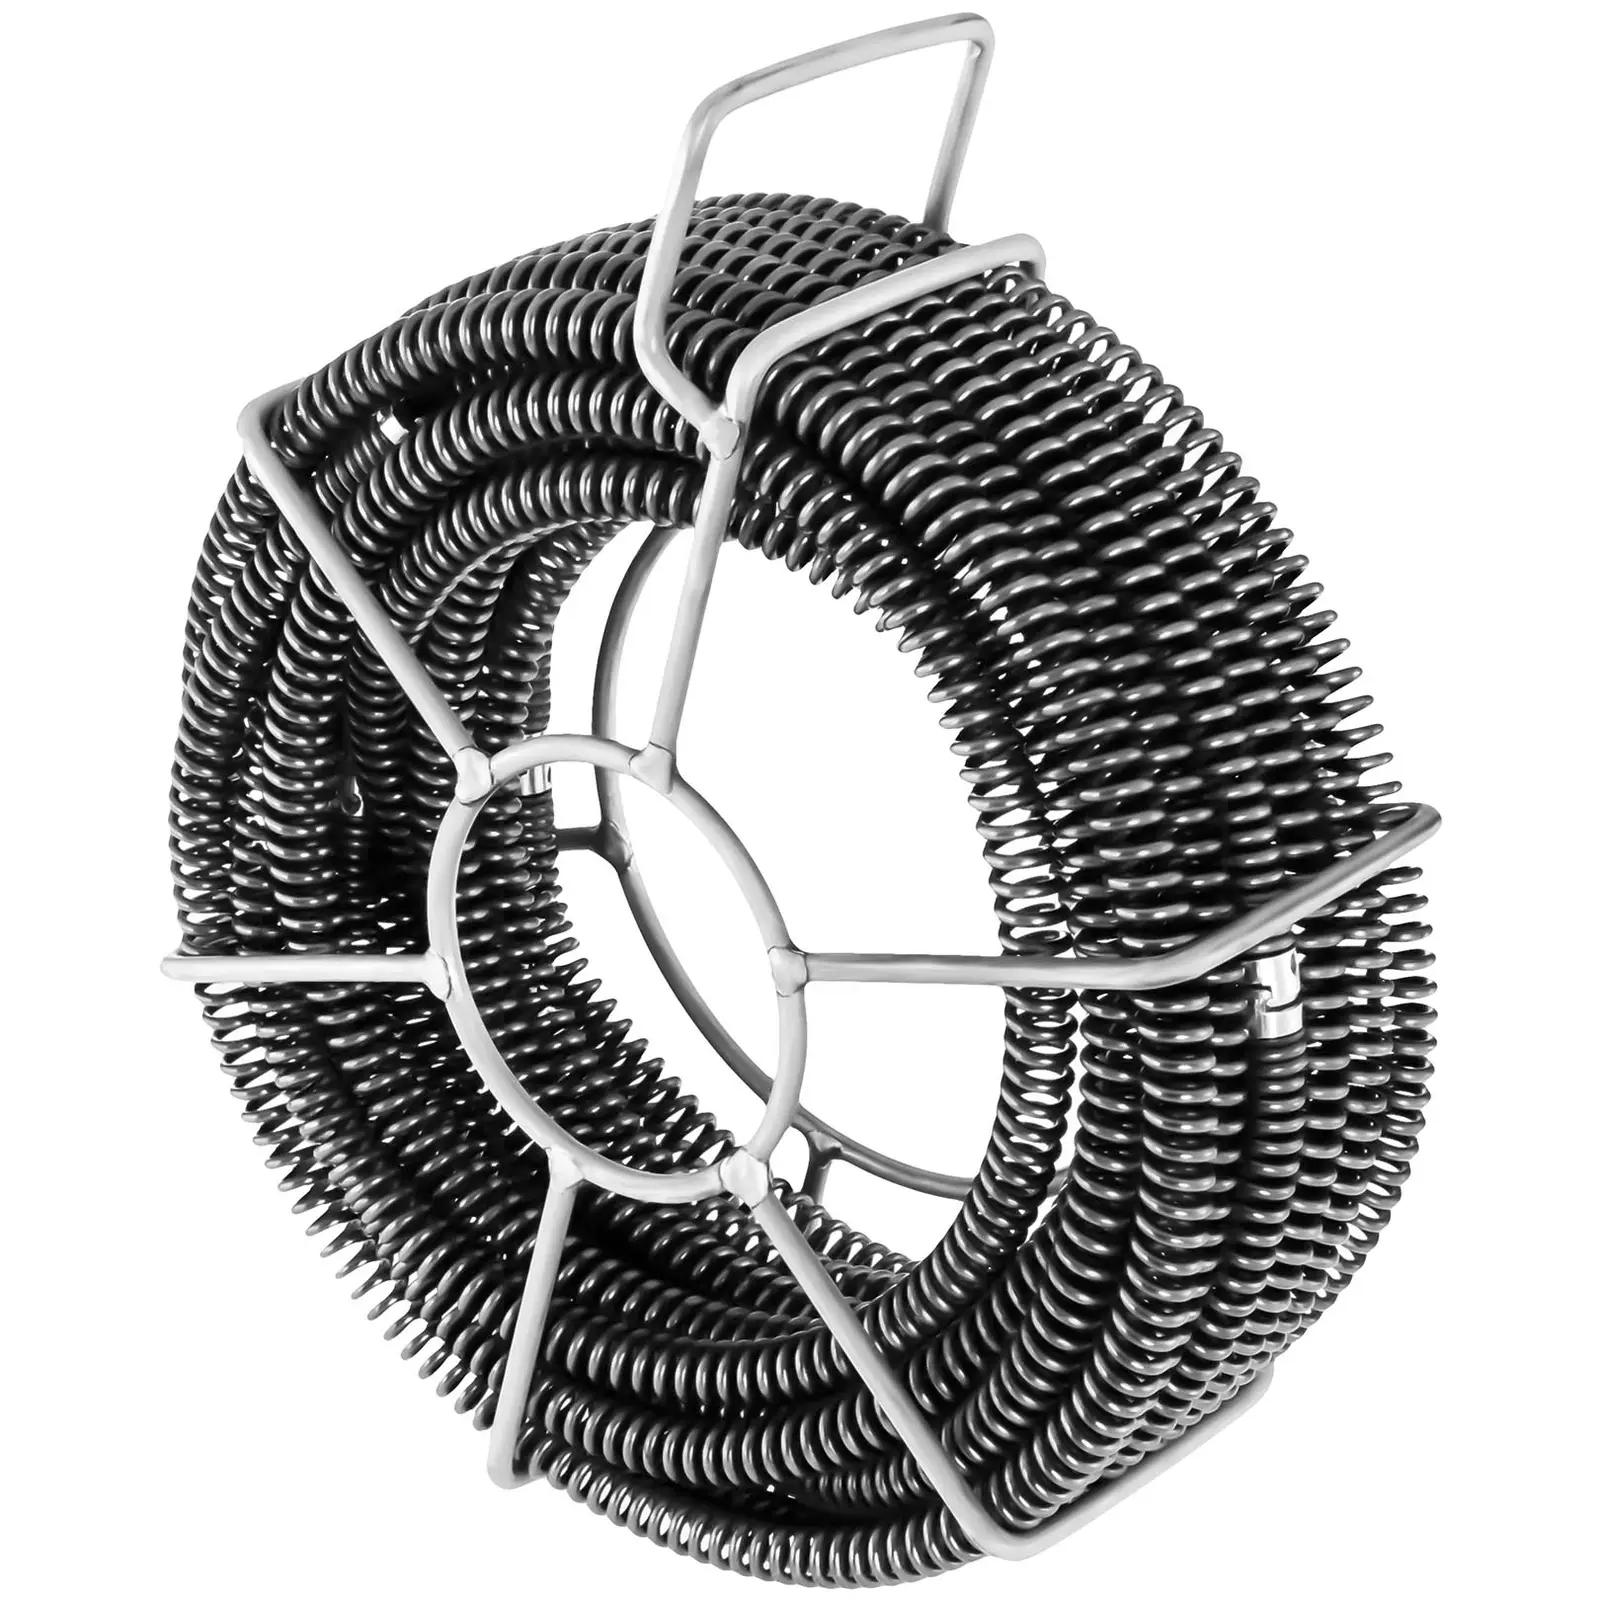 Spirales de plomberie - Lot de 6 x 2,45 m - Ø 16 mm